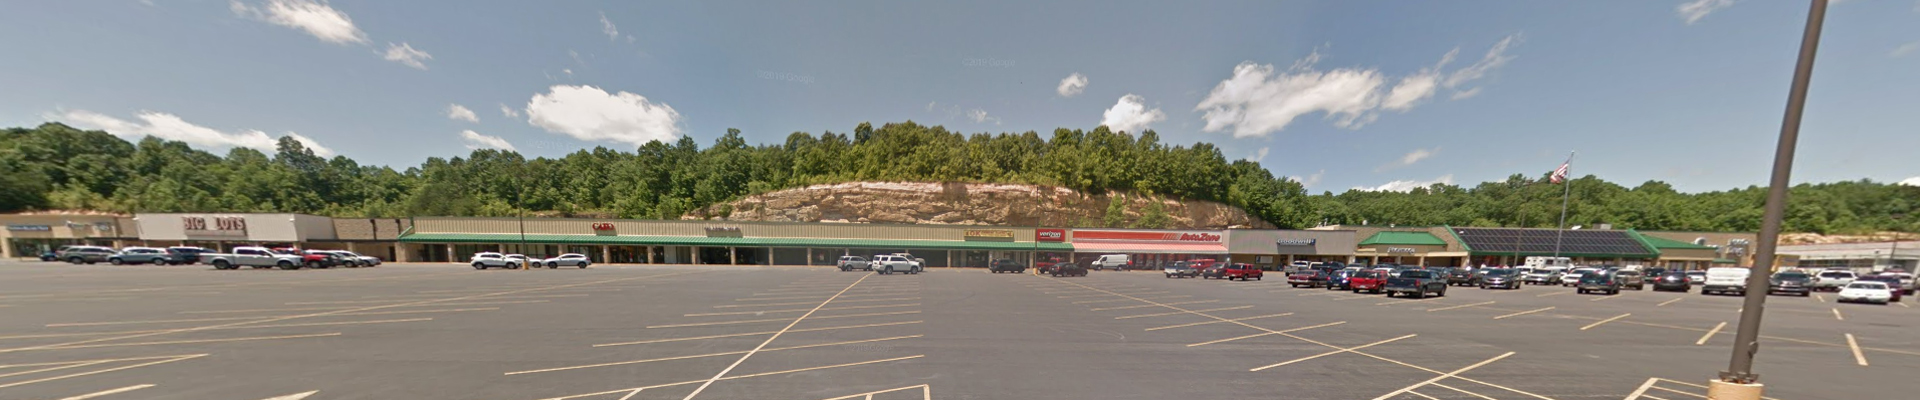 Fayette Square Shopping Center – Oak Hill, West Virginia